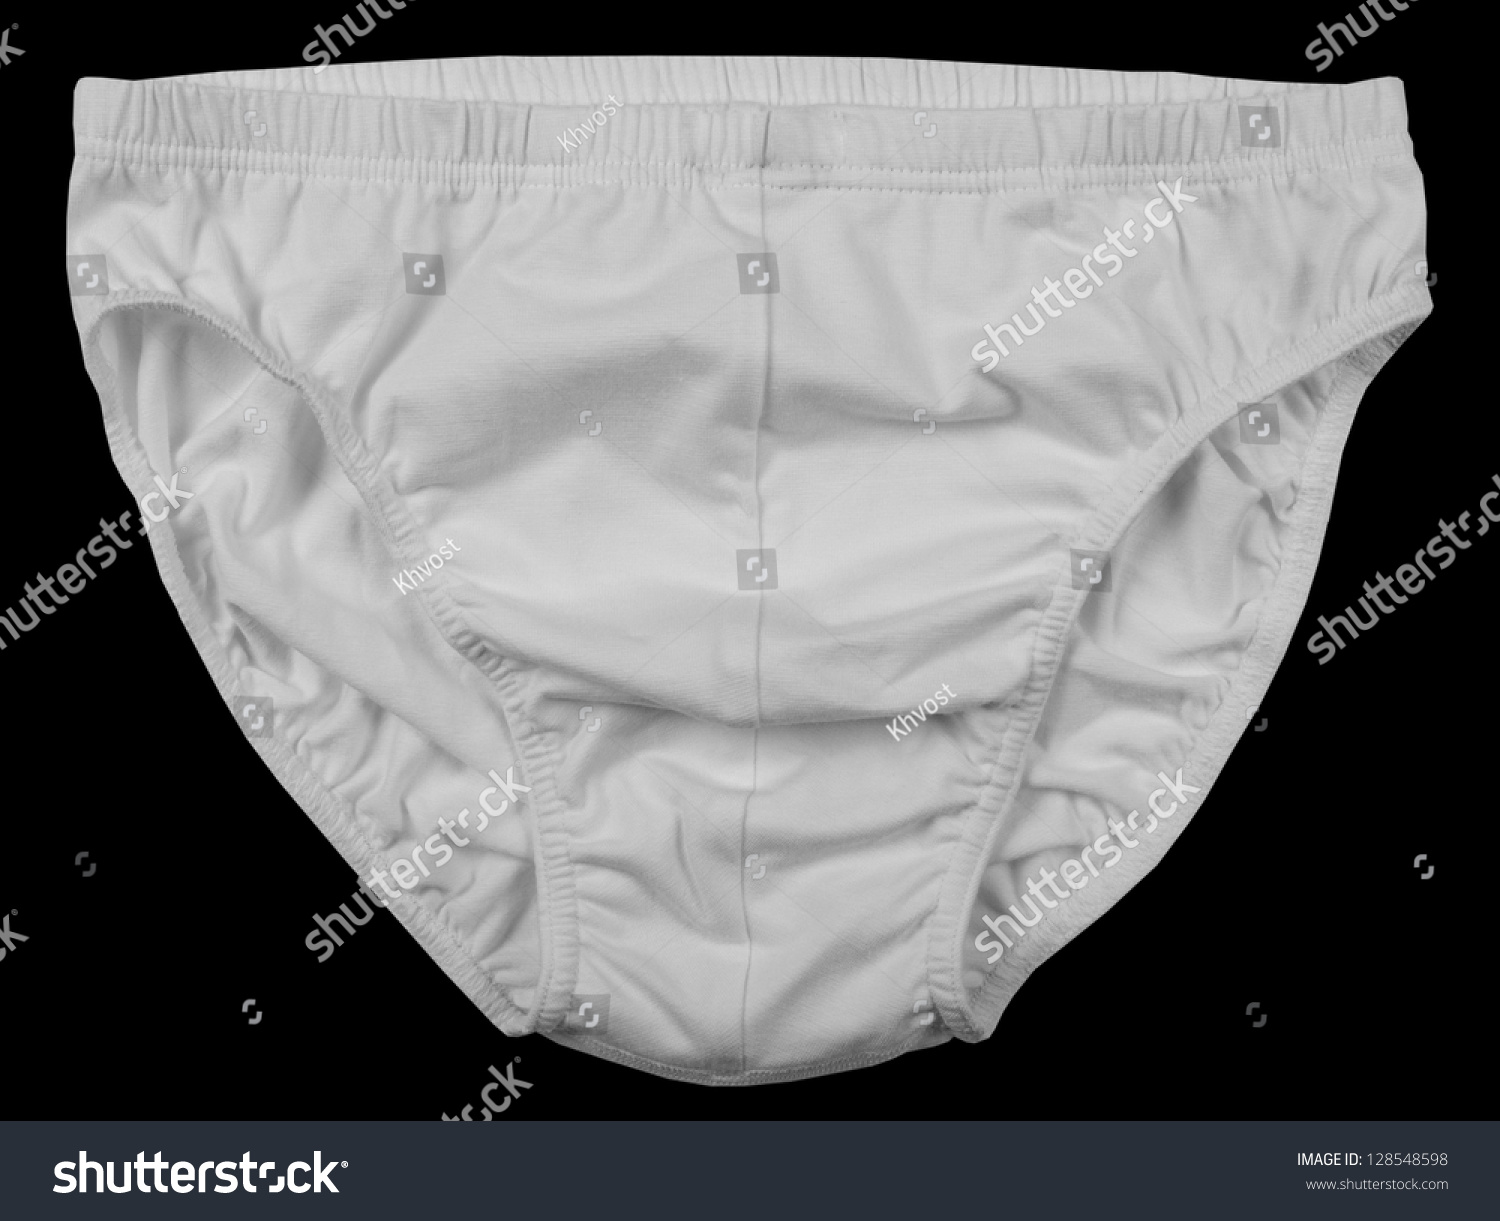 Male Pants Isolated On Black Background Stock Photo 128548598 ...